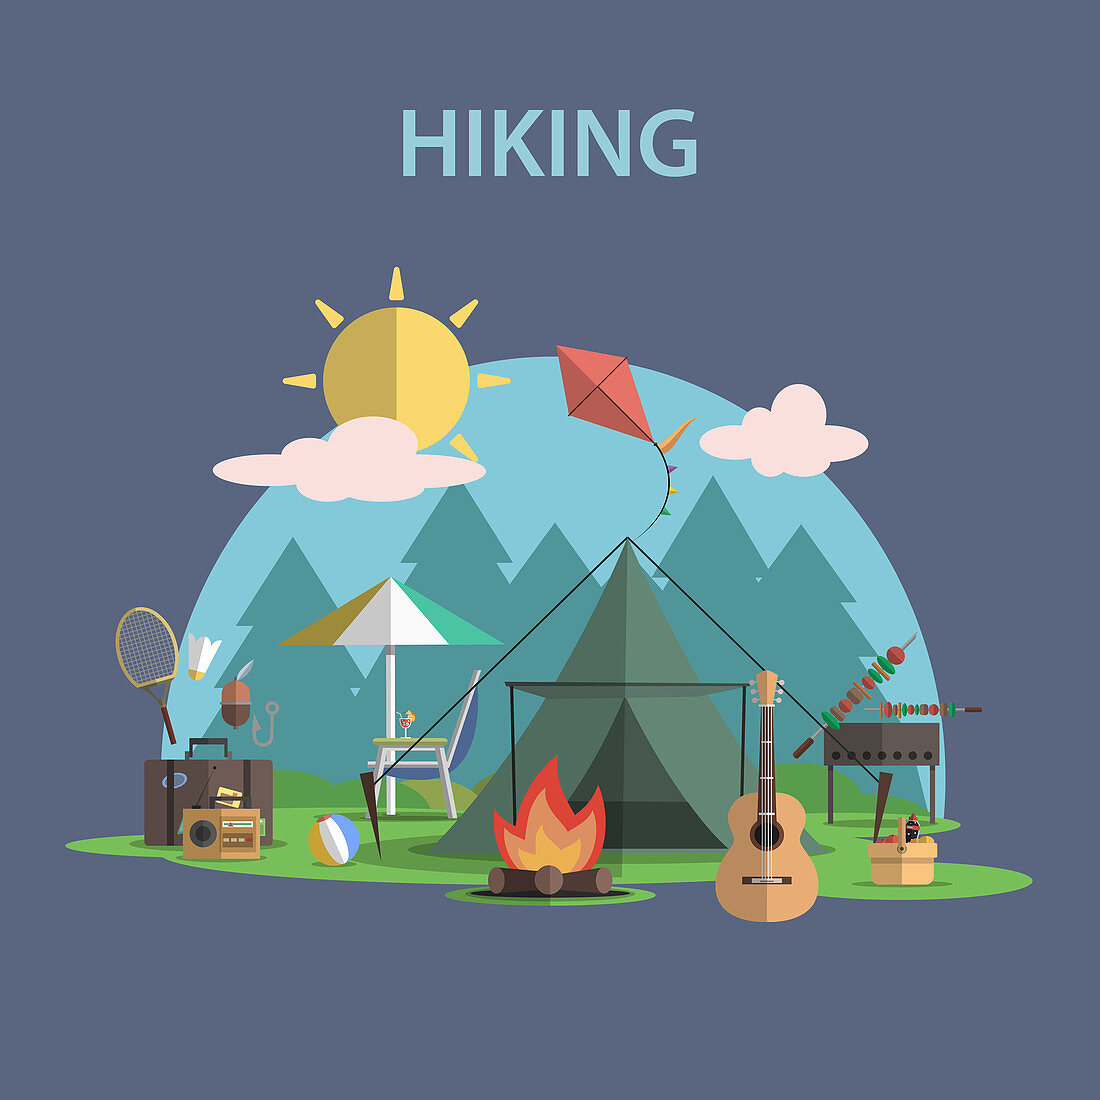 Hiking, illustration